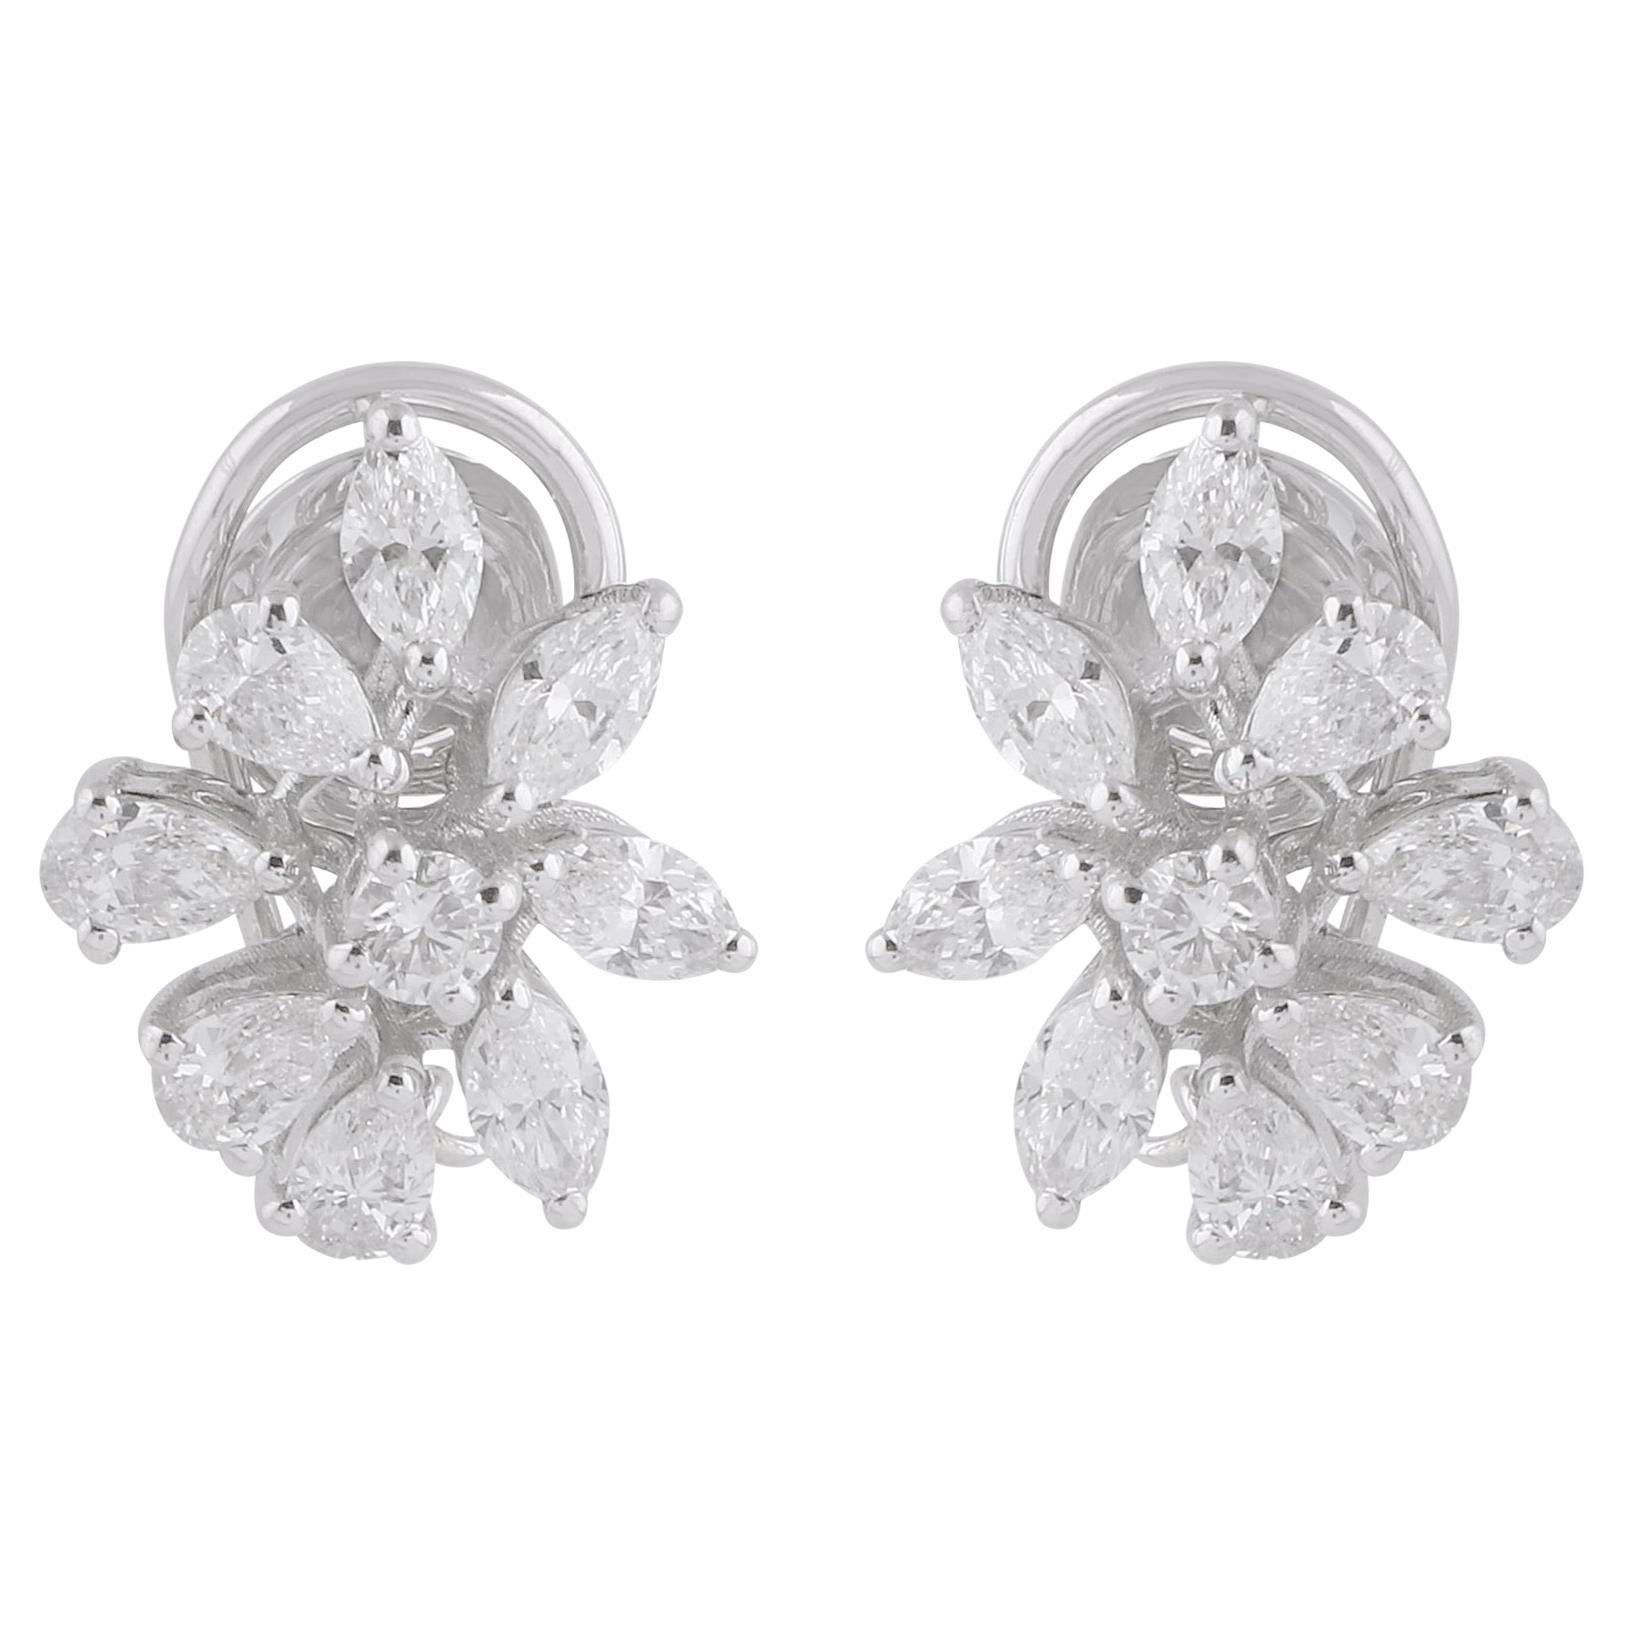 1.7 Carat SI Clarity HI Color Marquise Pear Diamond Earrings 18 Karat White Gold